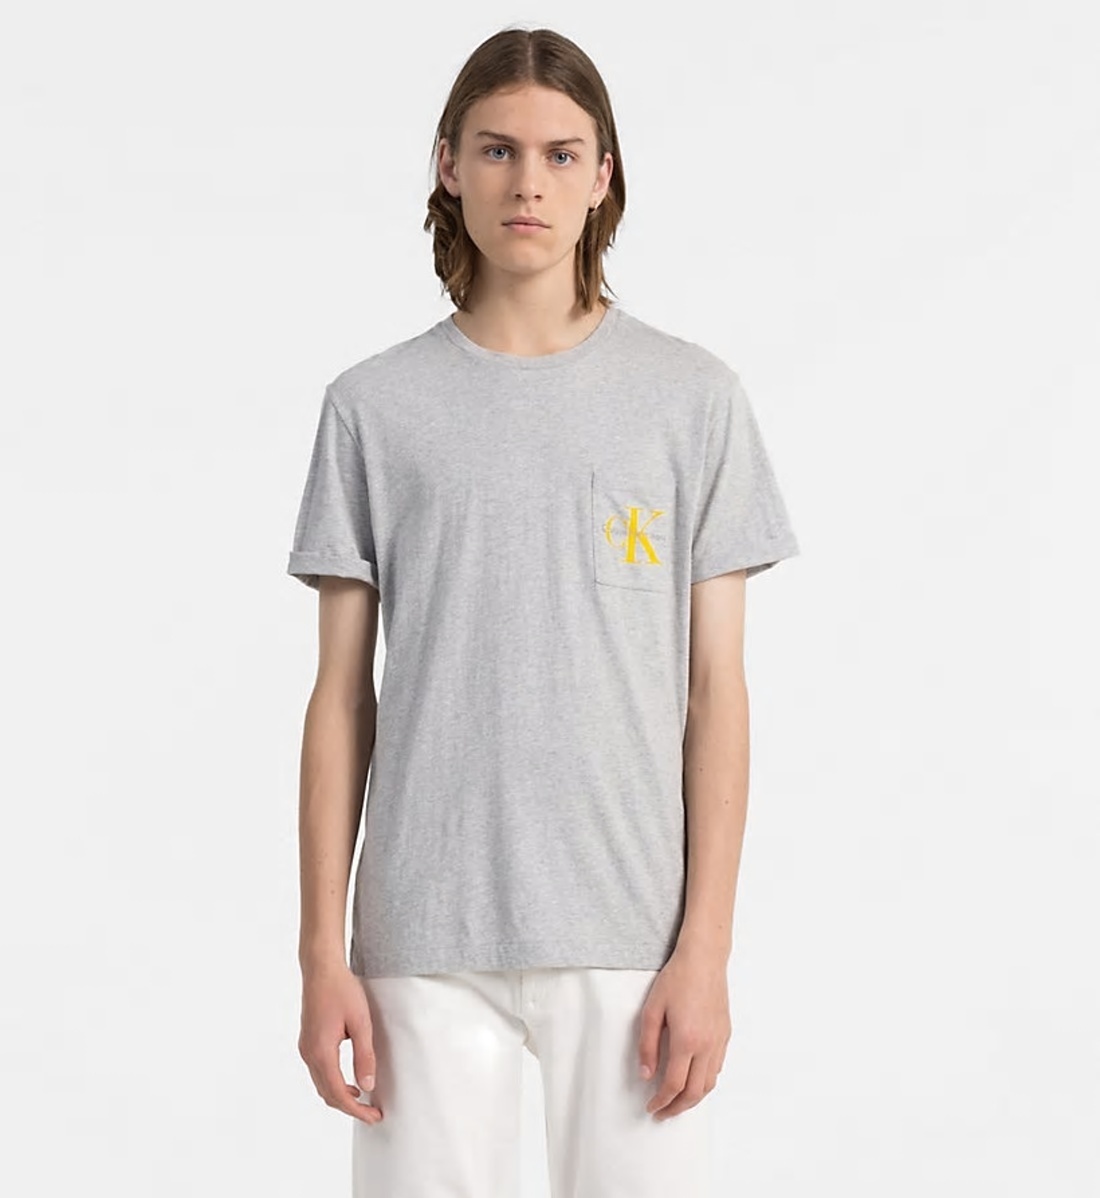 Calvin Klein pánské šedé tričko s kapsičkou - M (035)